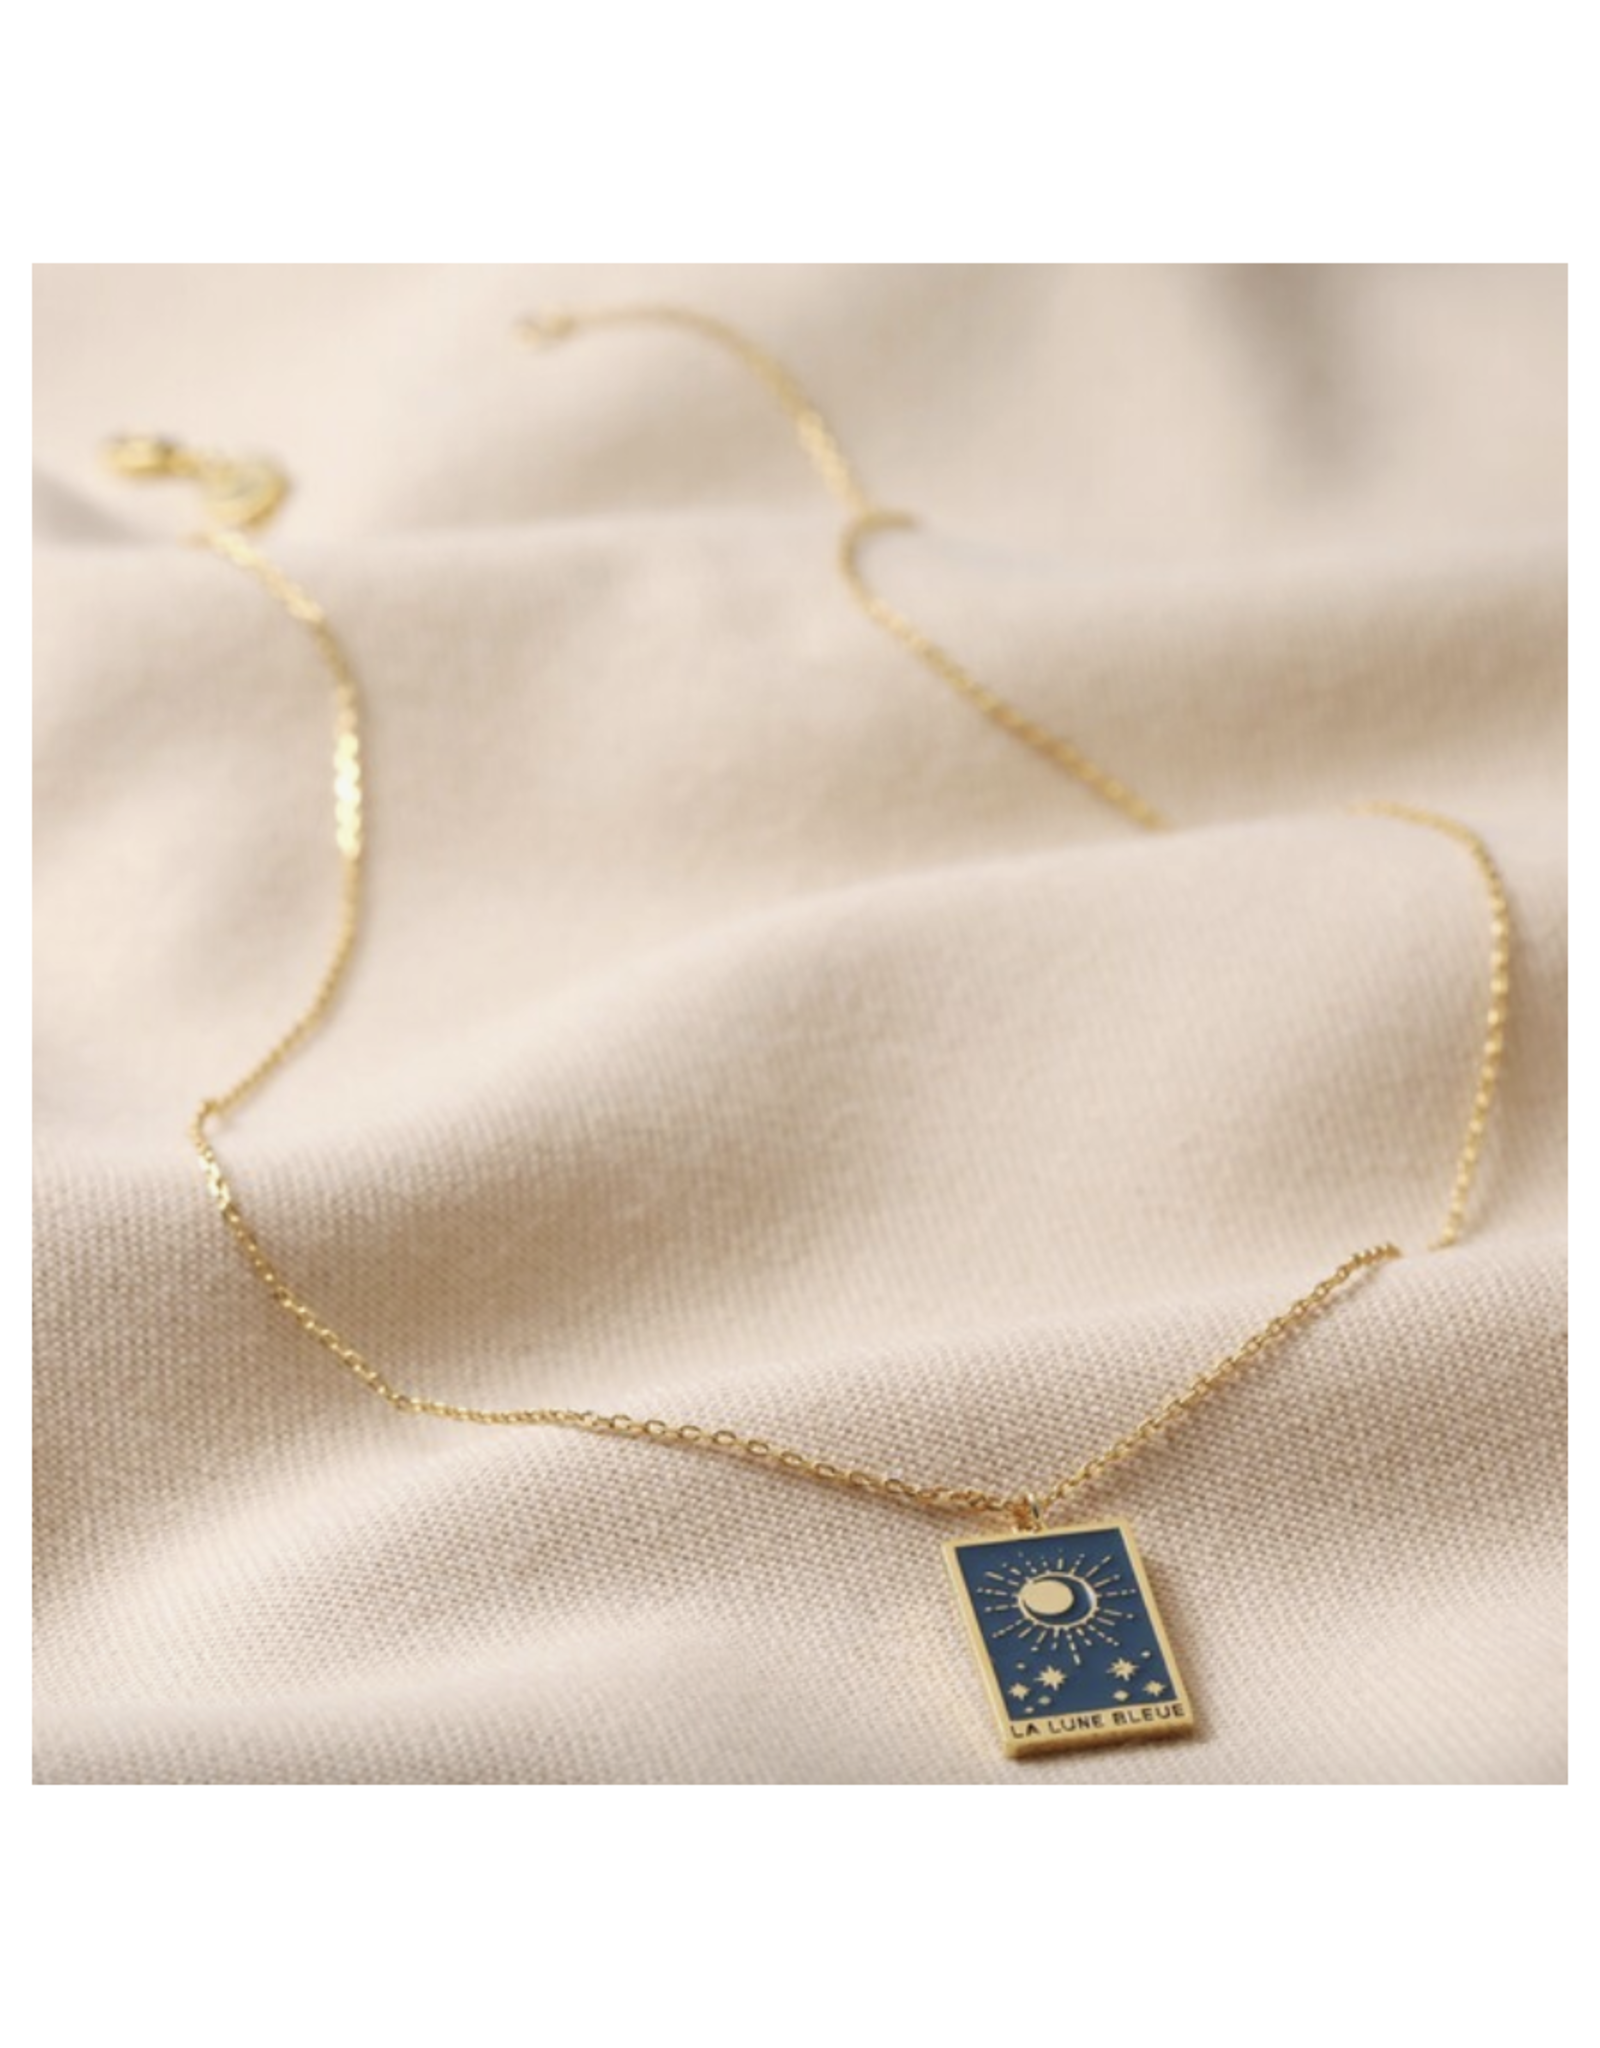 Blue Moon Tarot Card Necklace